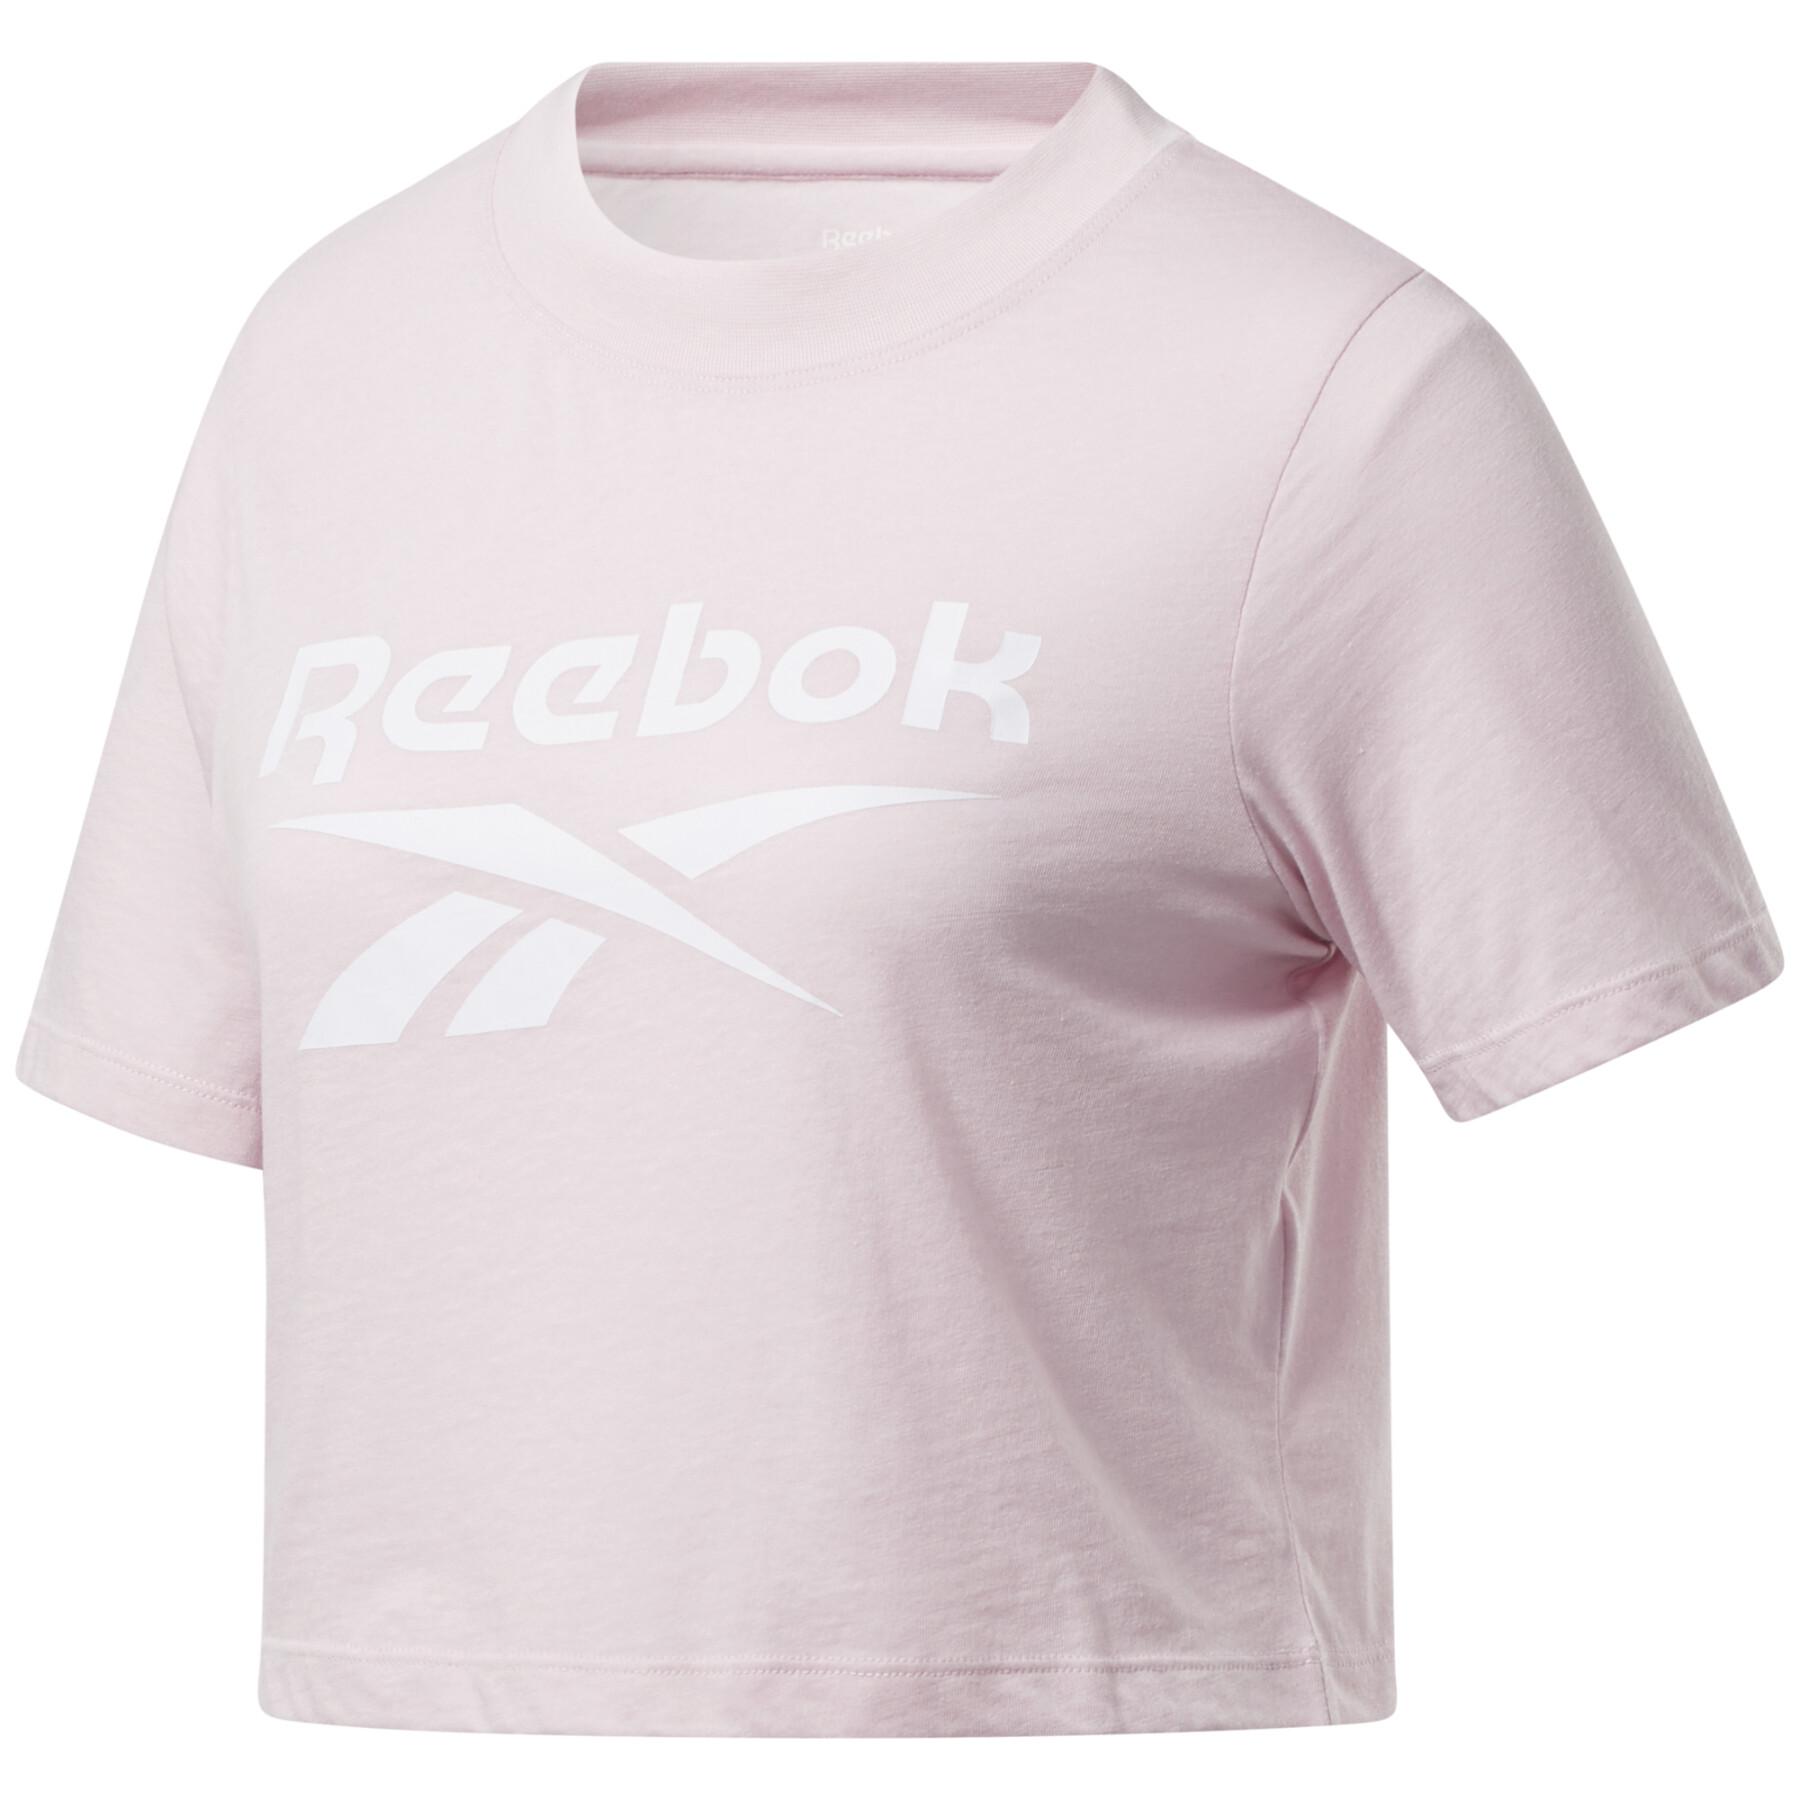 Camiseta mujer Reebok crop Identity